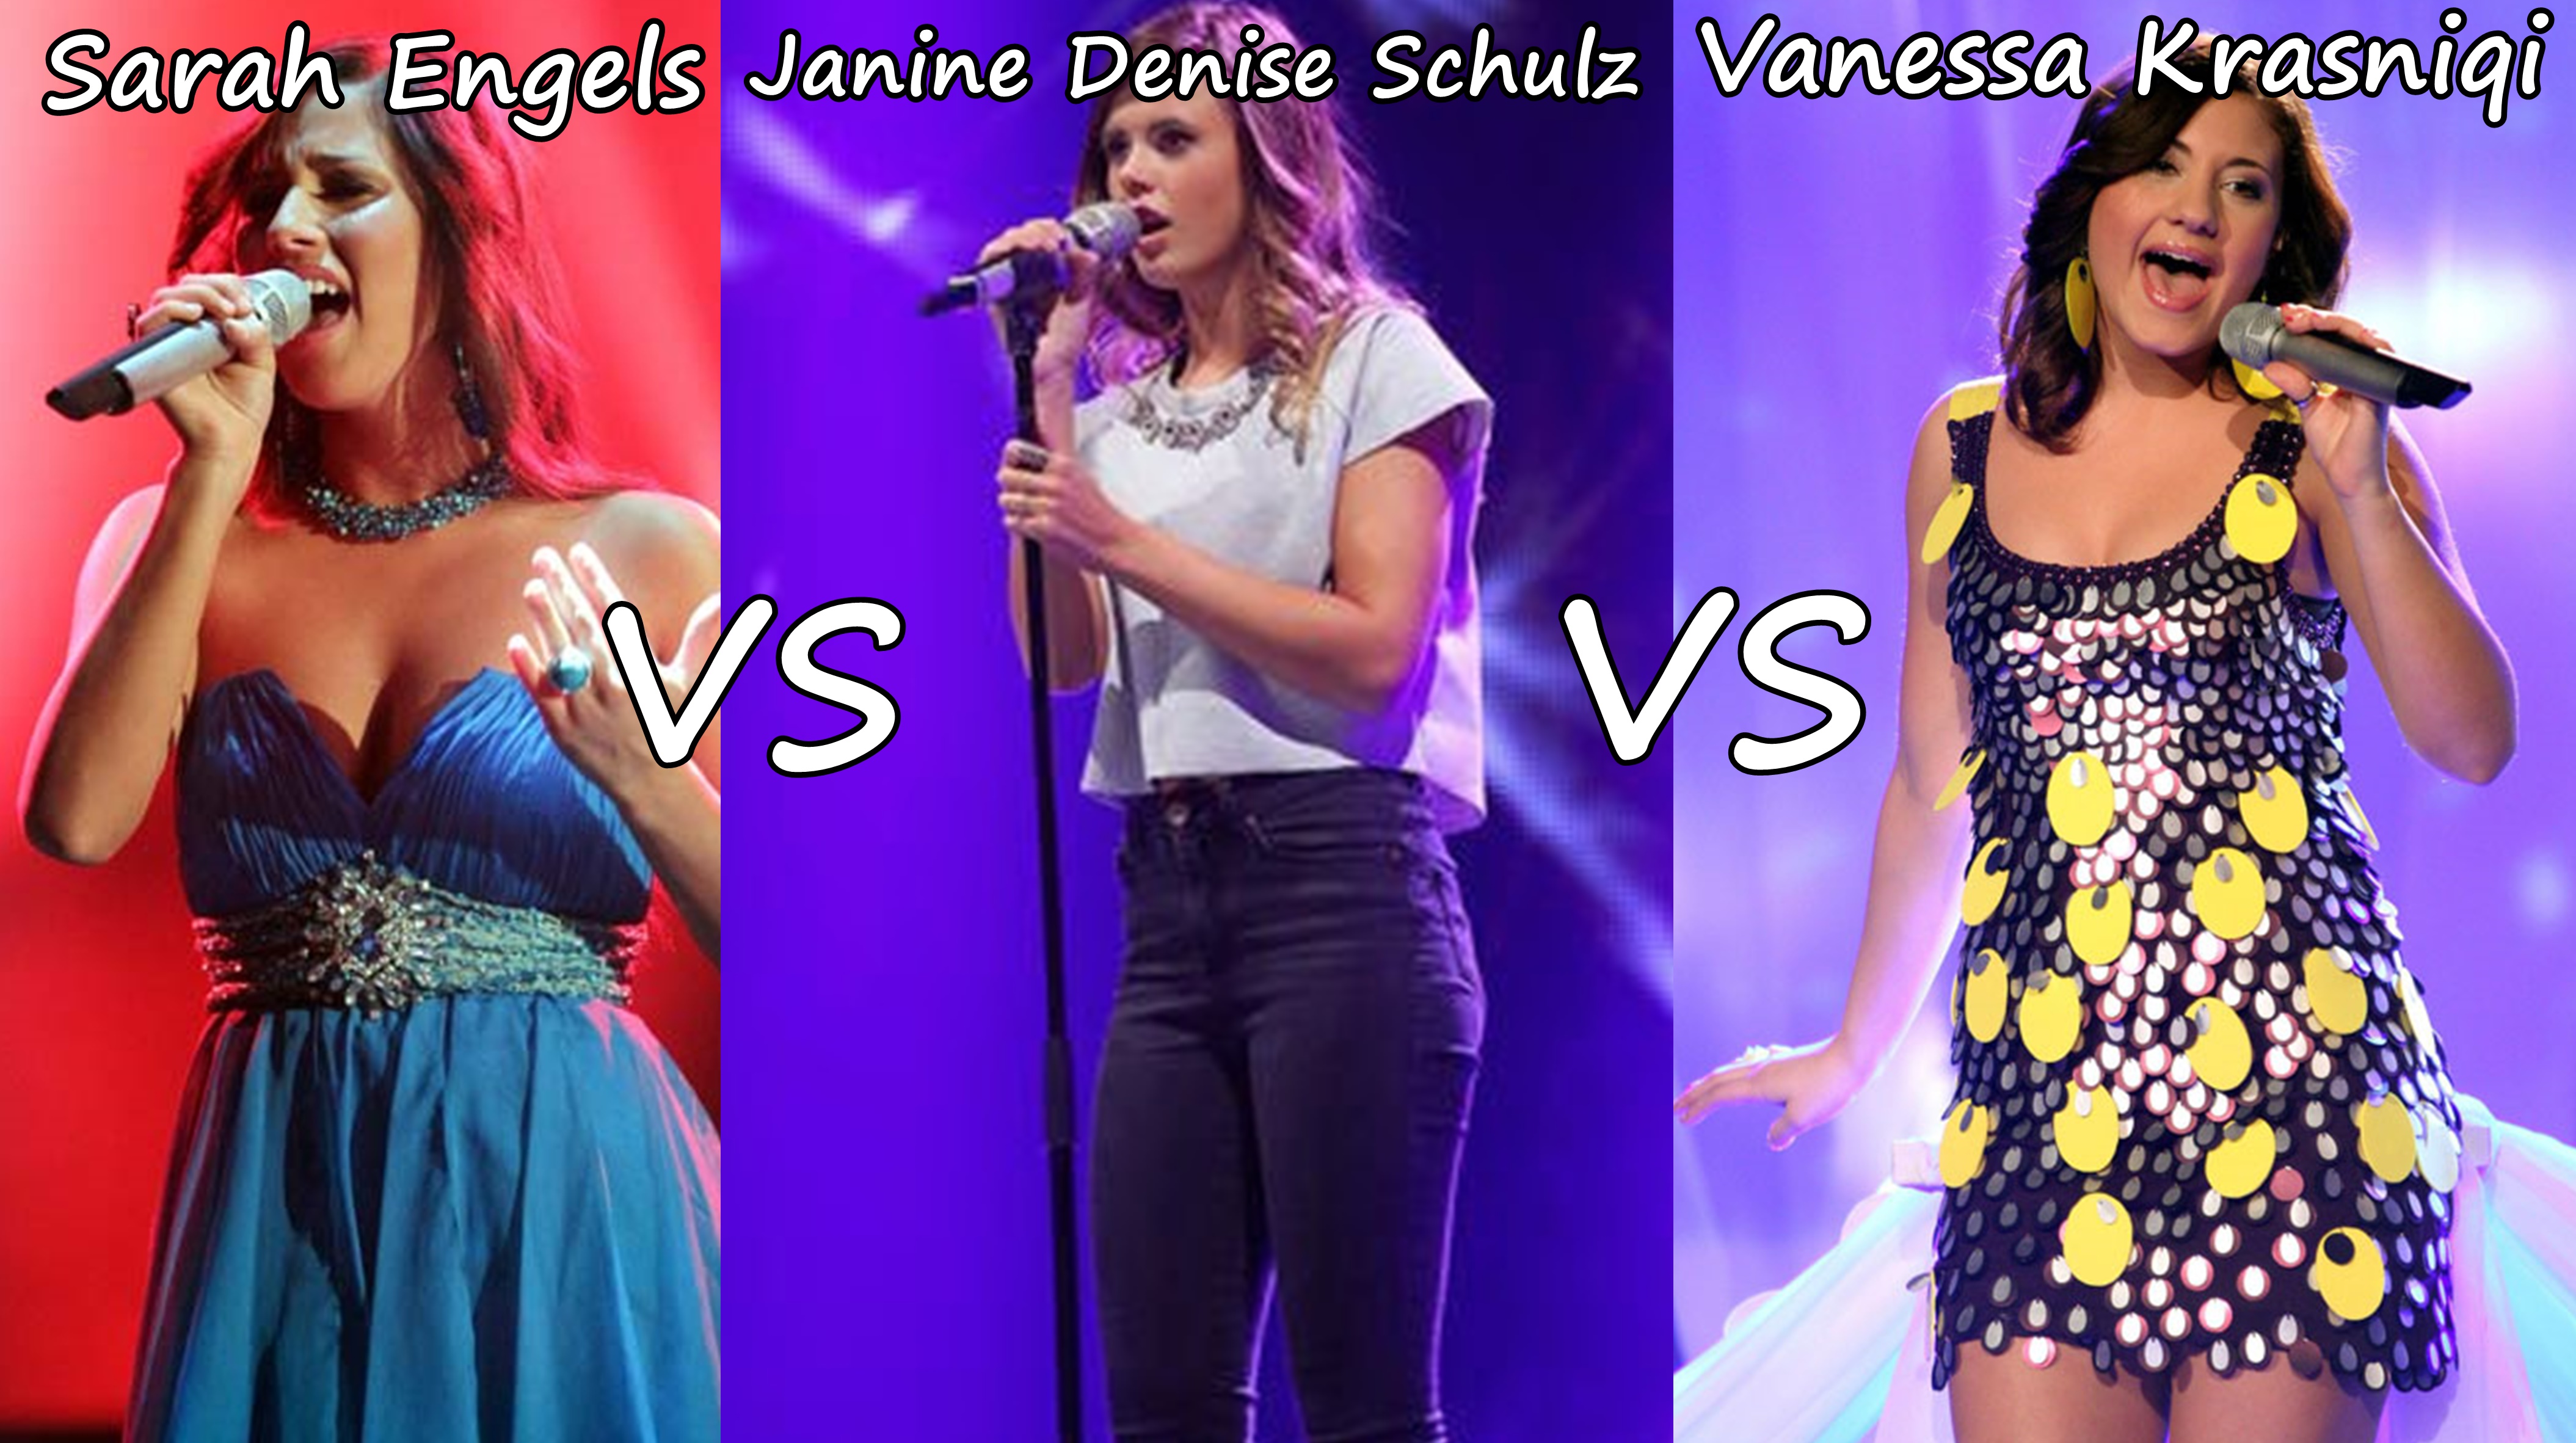 The Voice Of Germany - "Die Knockouts" 
Sarah Engels vs. Janine Denise Schulz vs. Vanessa Krasniqi